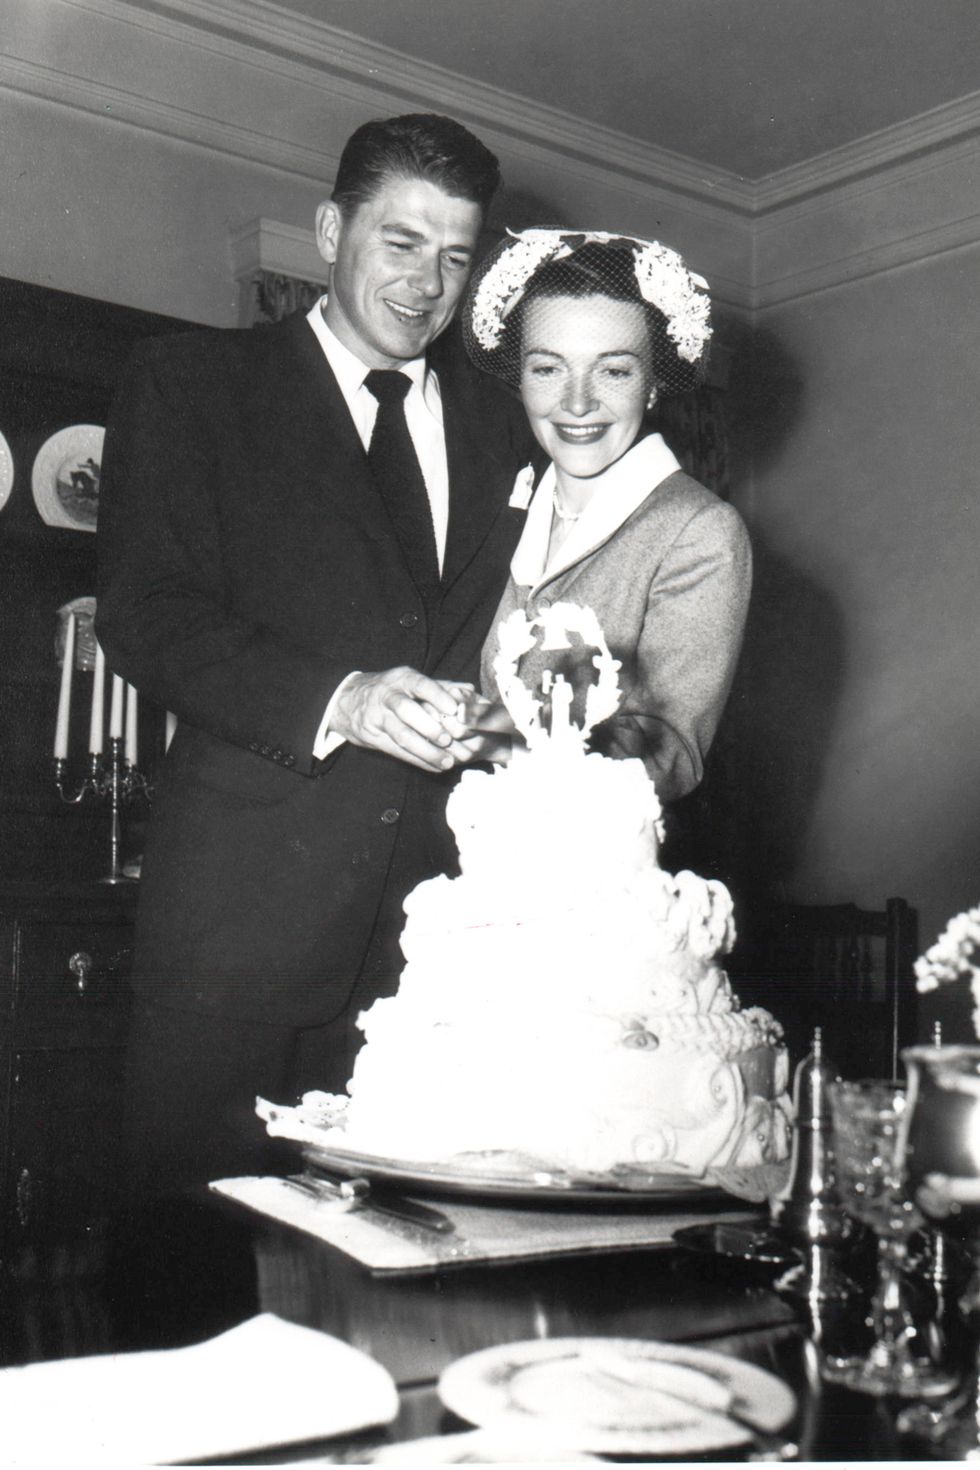 Nancy and Ronald Reagan cutting their wedding cake in 1952